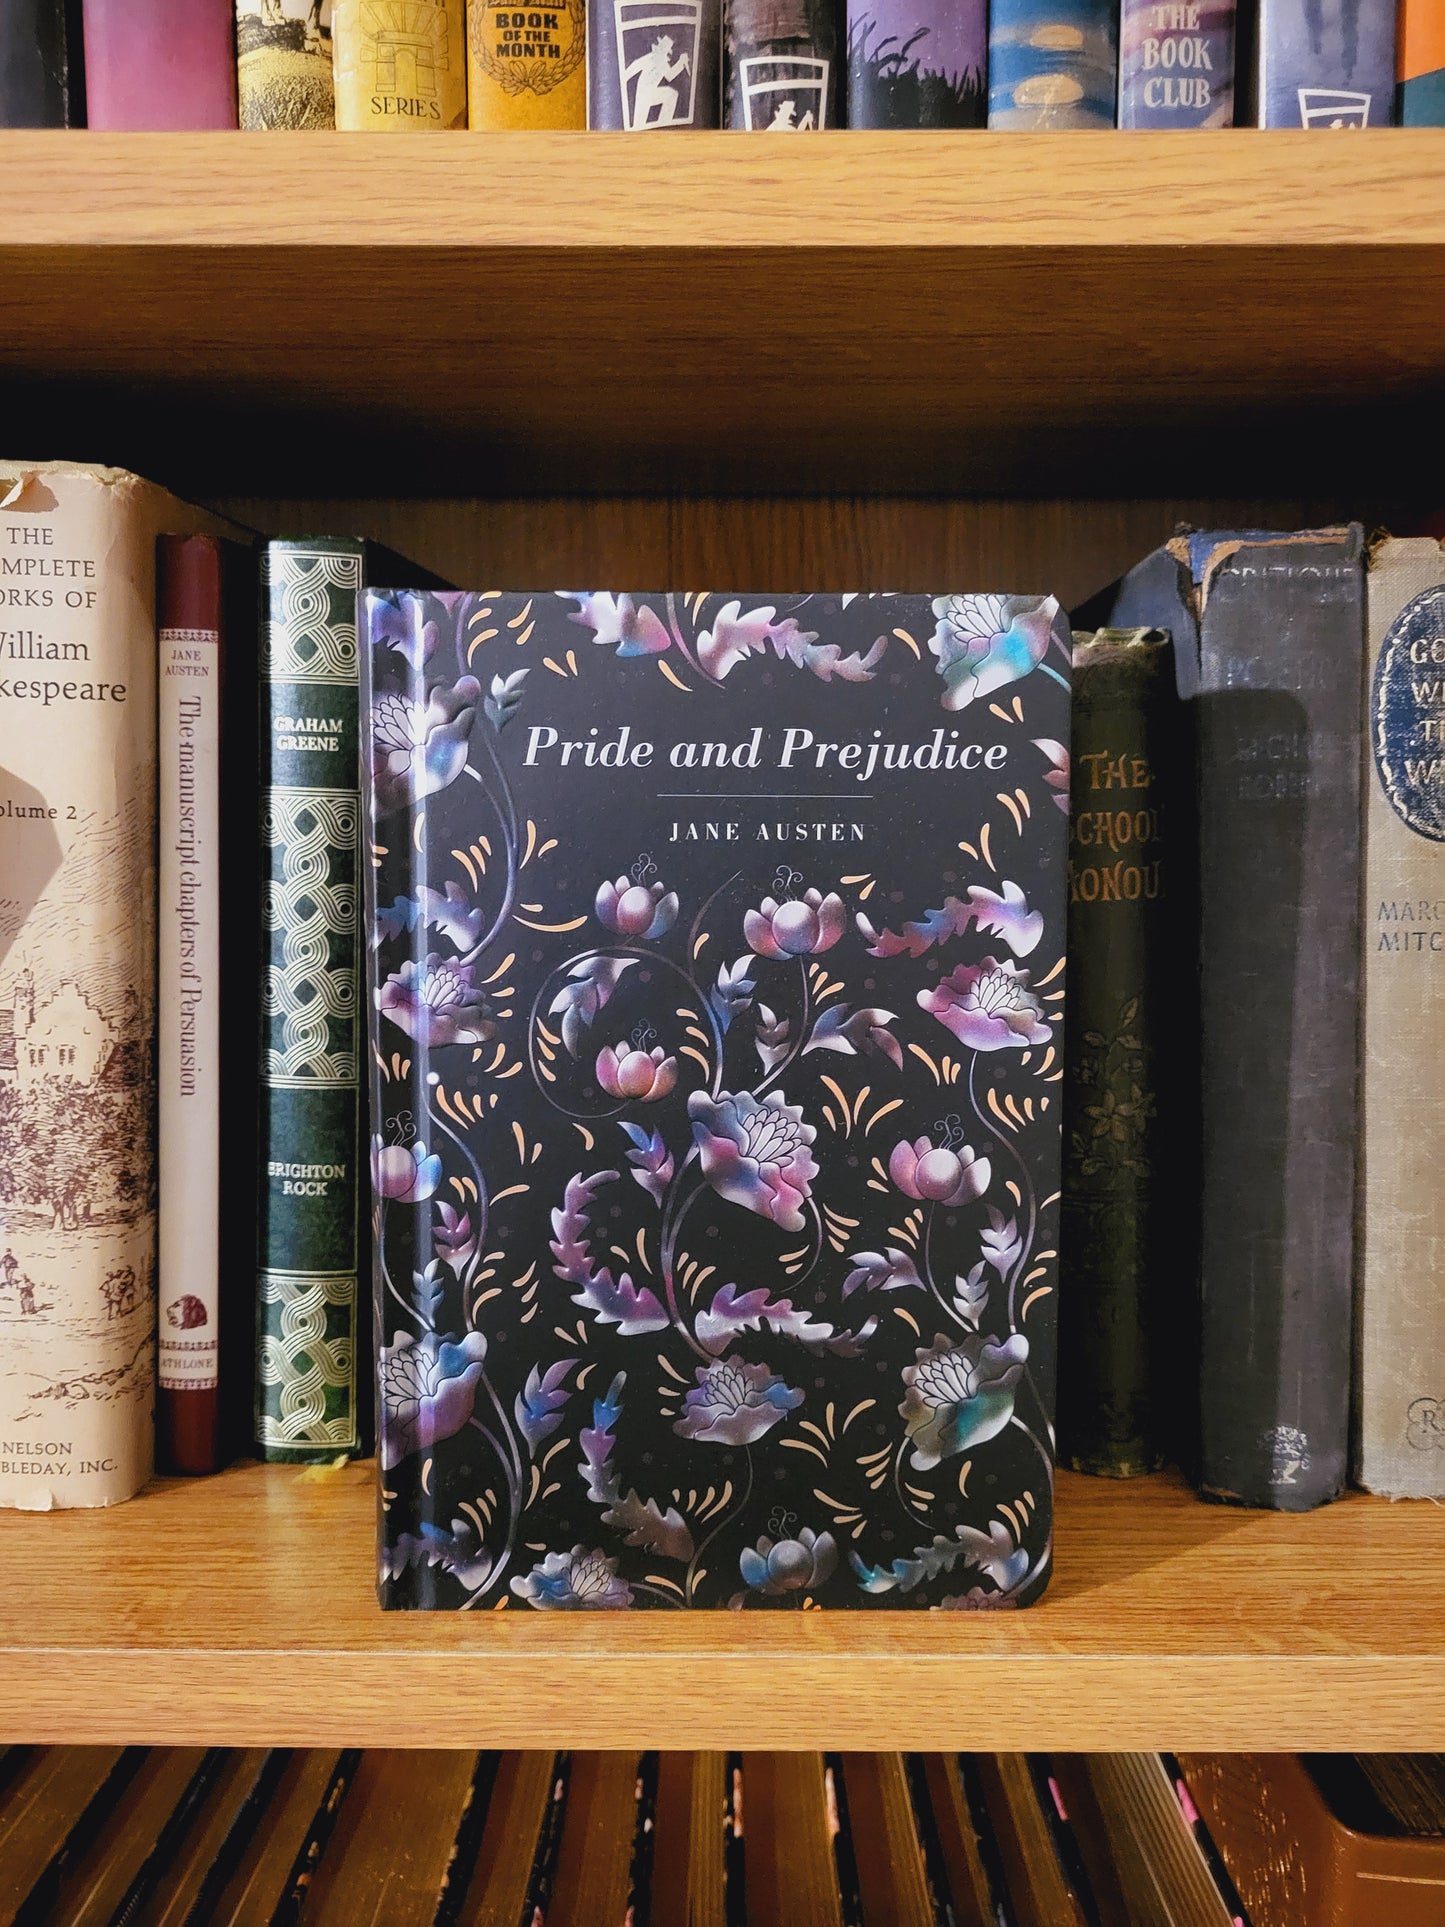 Pride and Prejudice - Jane Austen (Chiltern Edition)